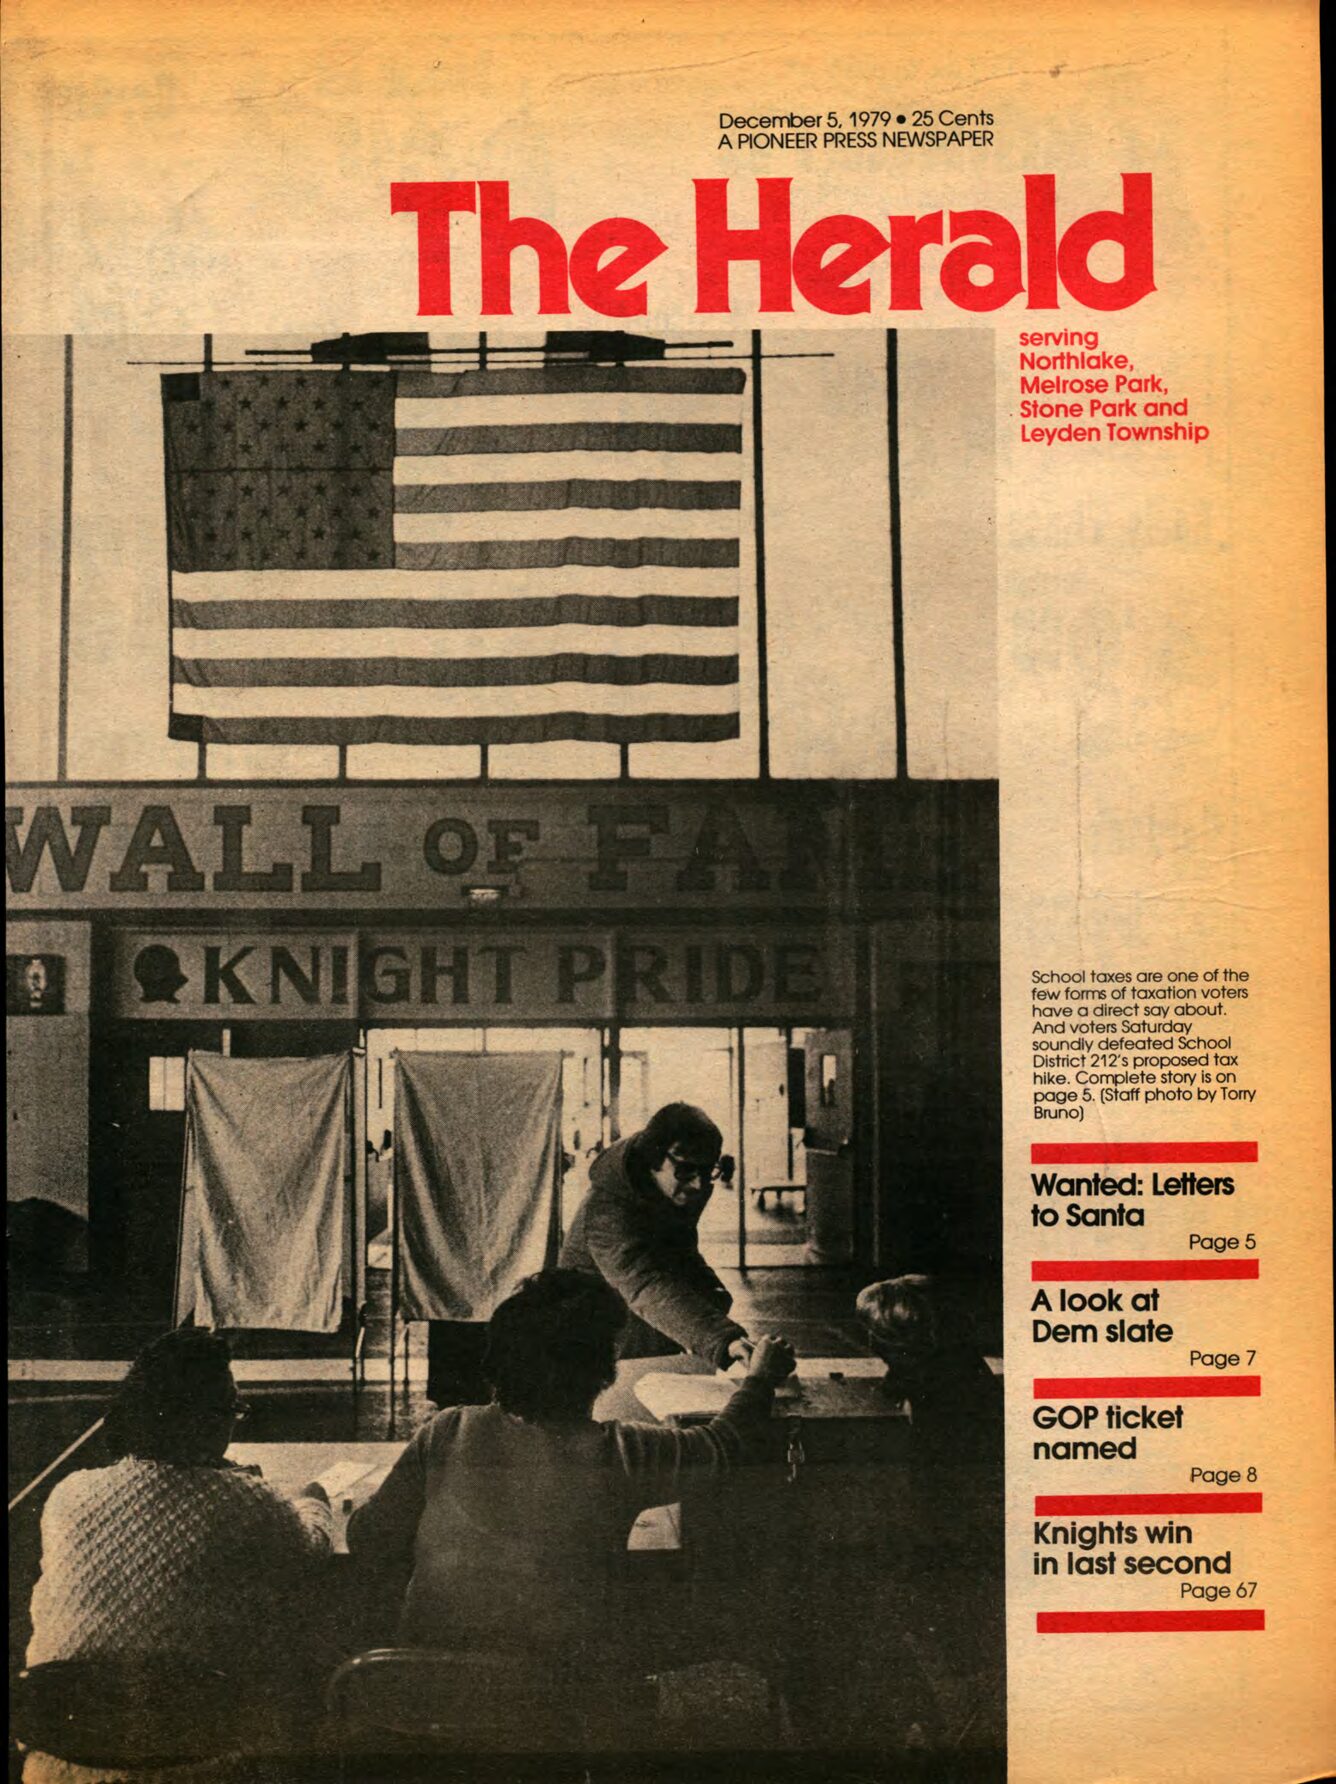 The Herald – 19791205